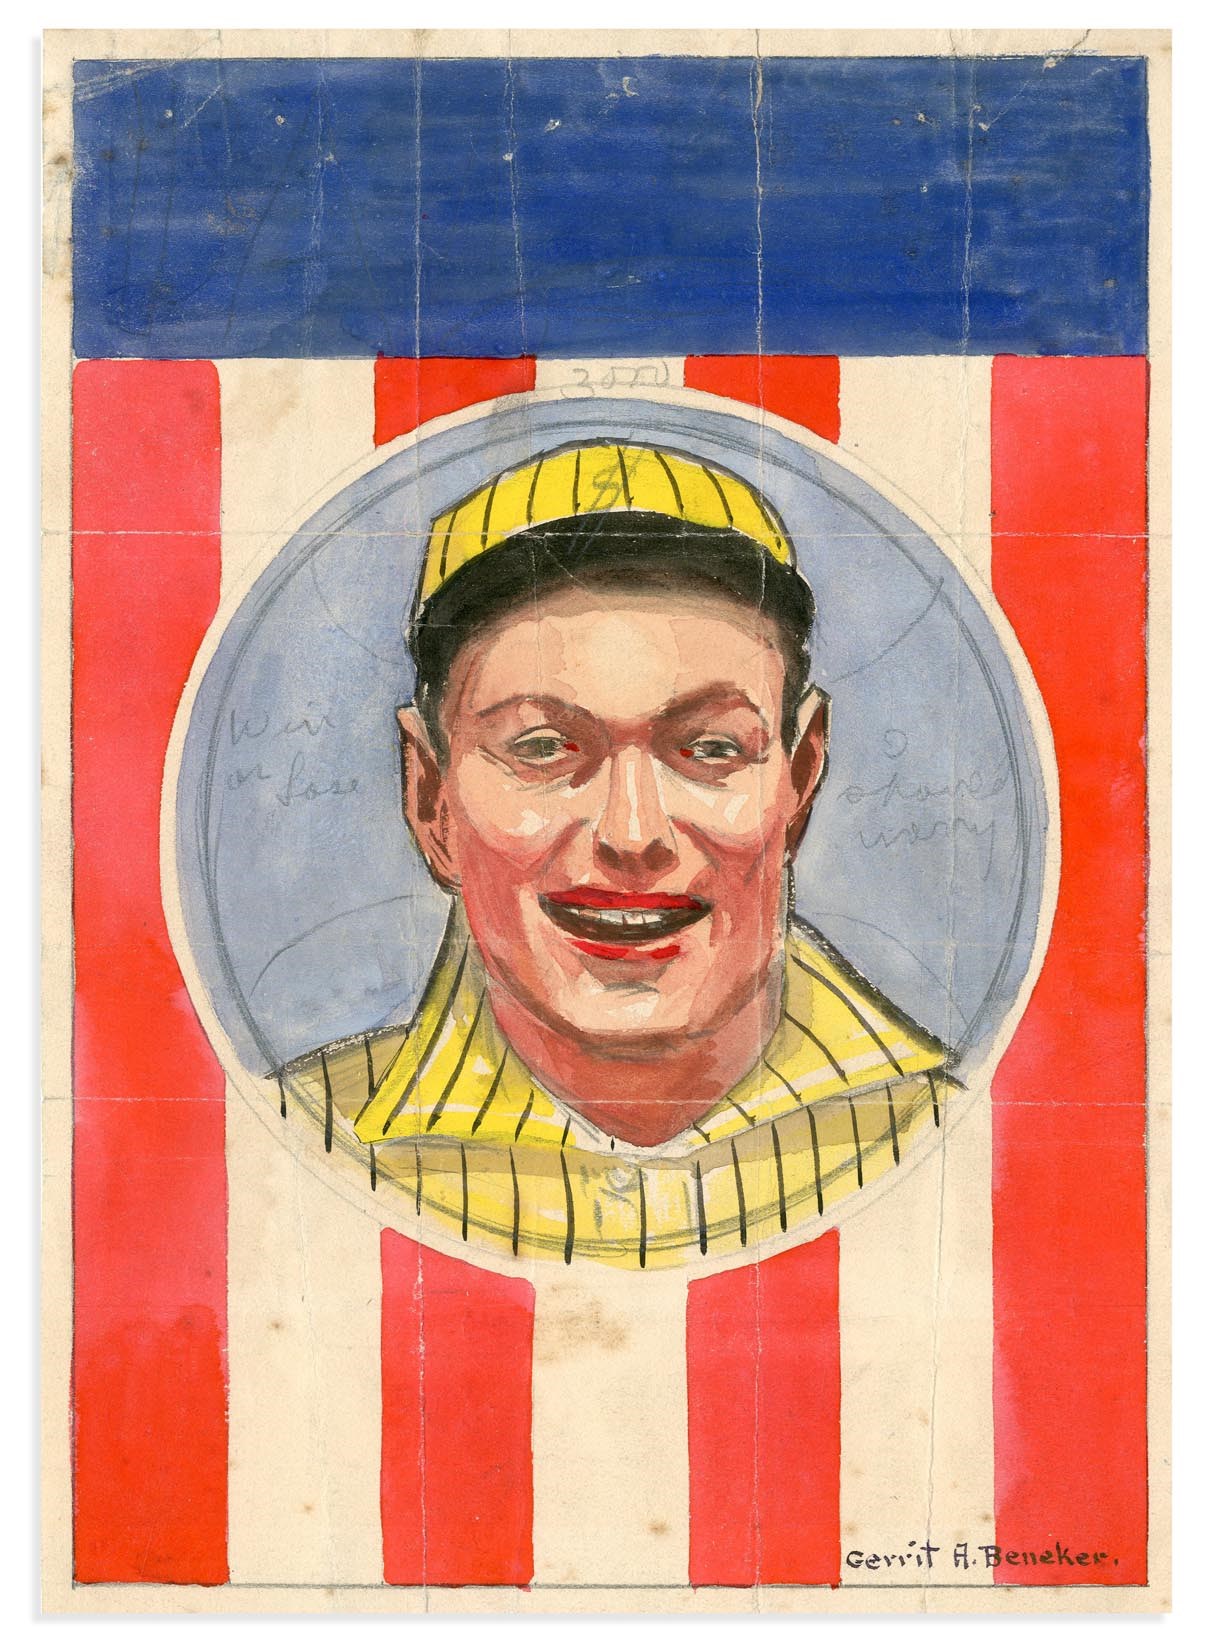 November 1913 "New World's Champions" Baseball Magazine Cover Art Study by Gerrit Beneker (1882-1934)